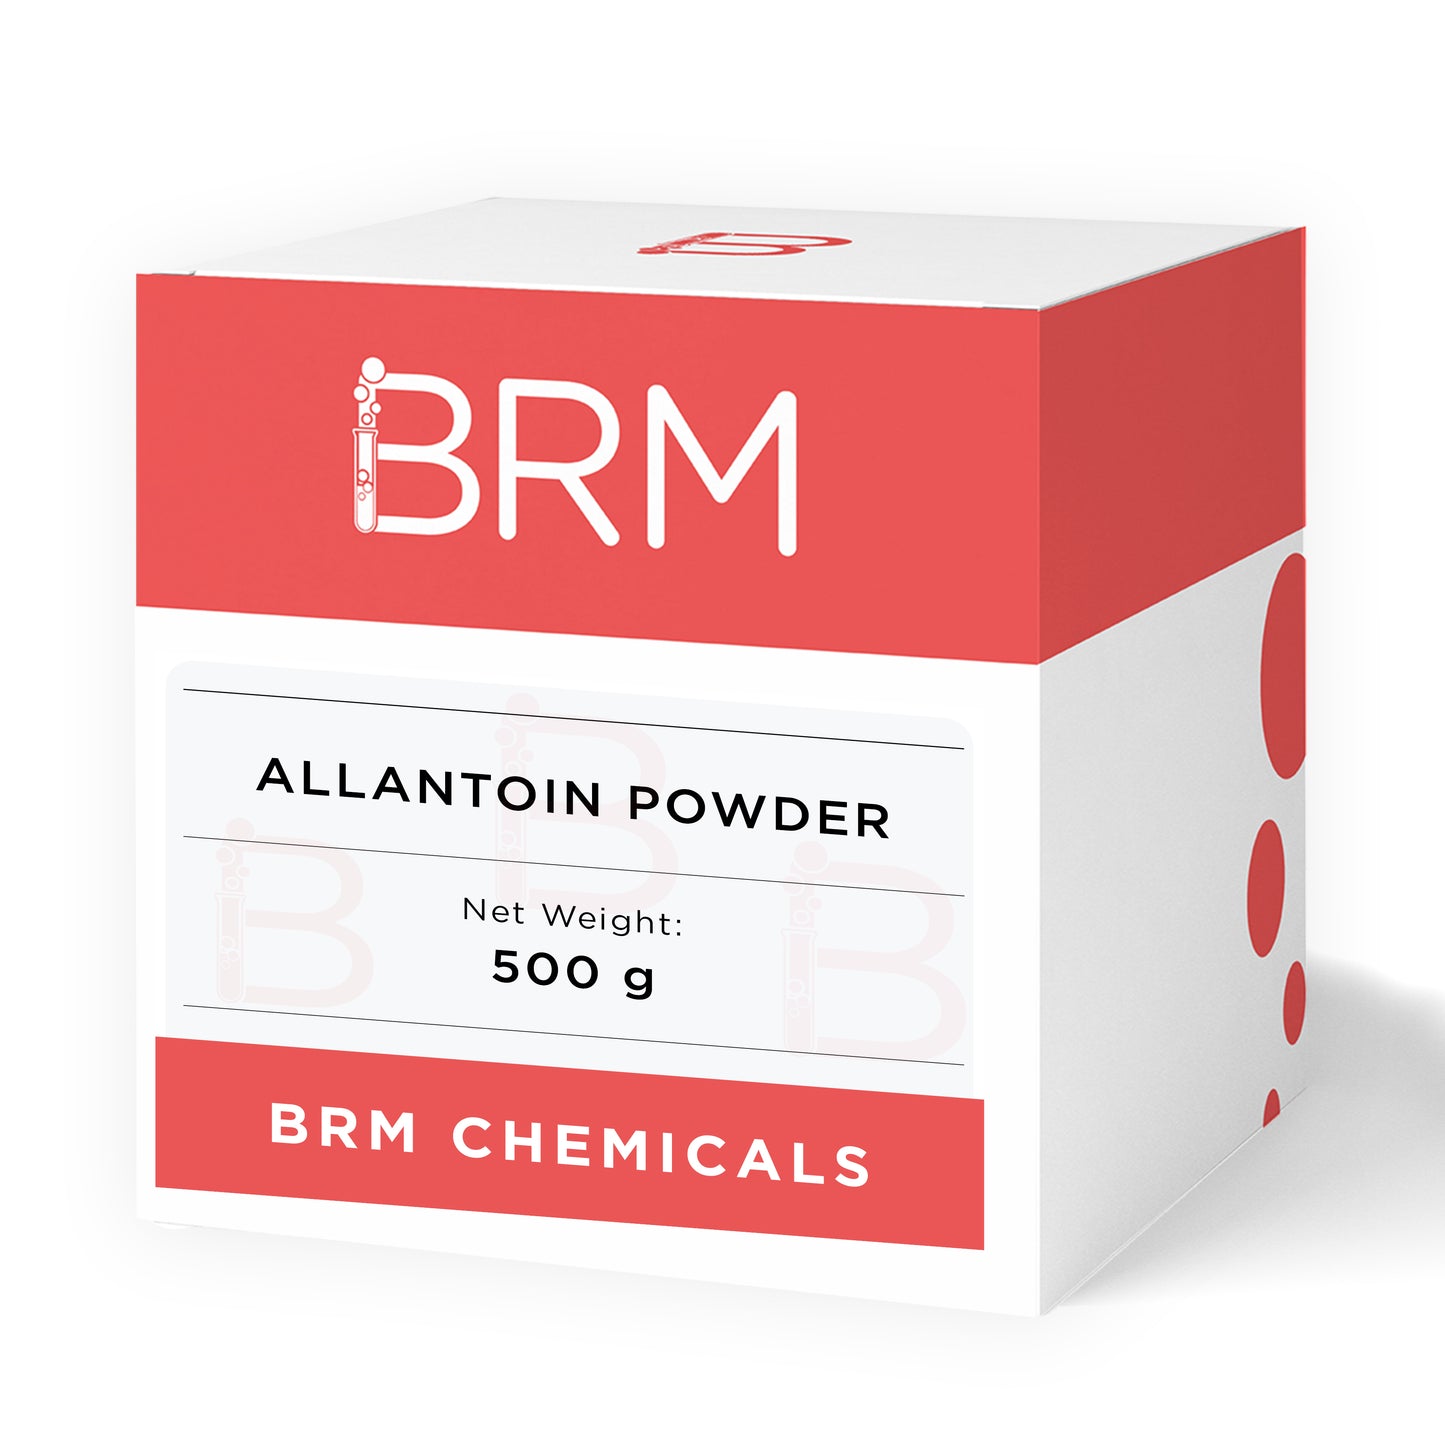 allantoin powder, 500g box of allantoin powder